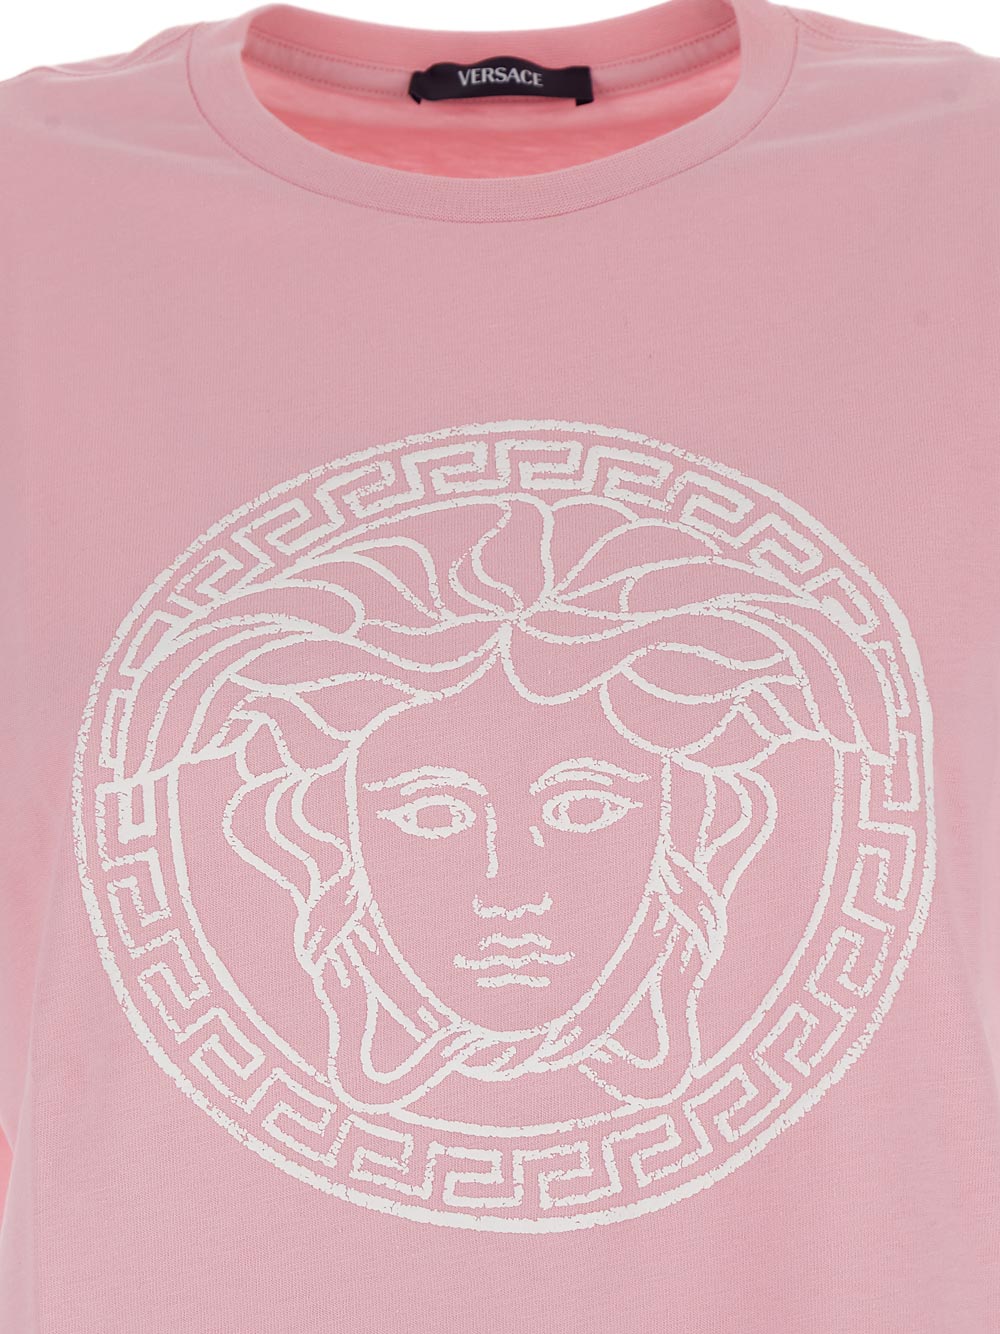 Versace Medusa Head-Print T-Shirt